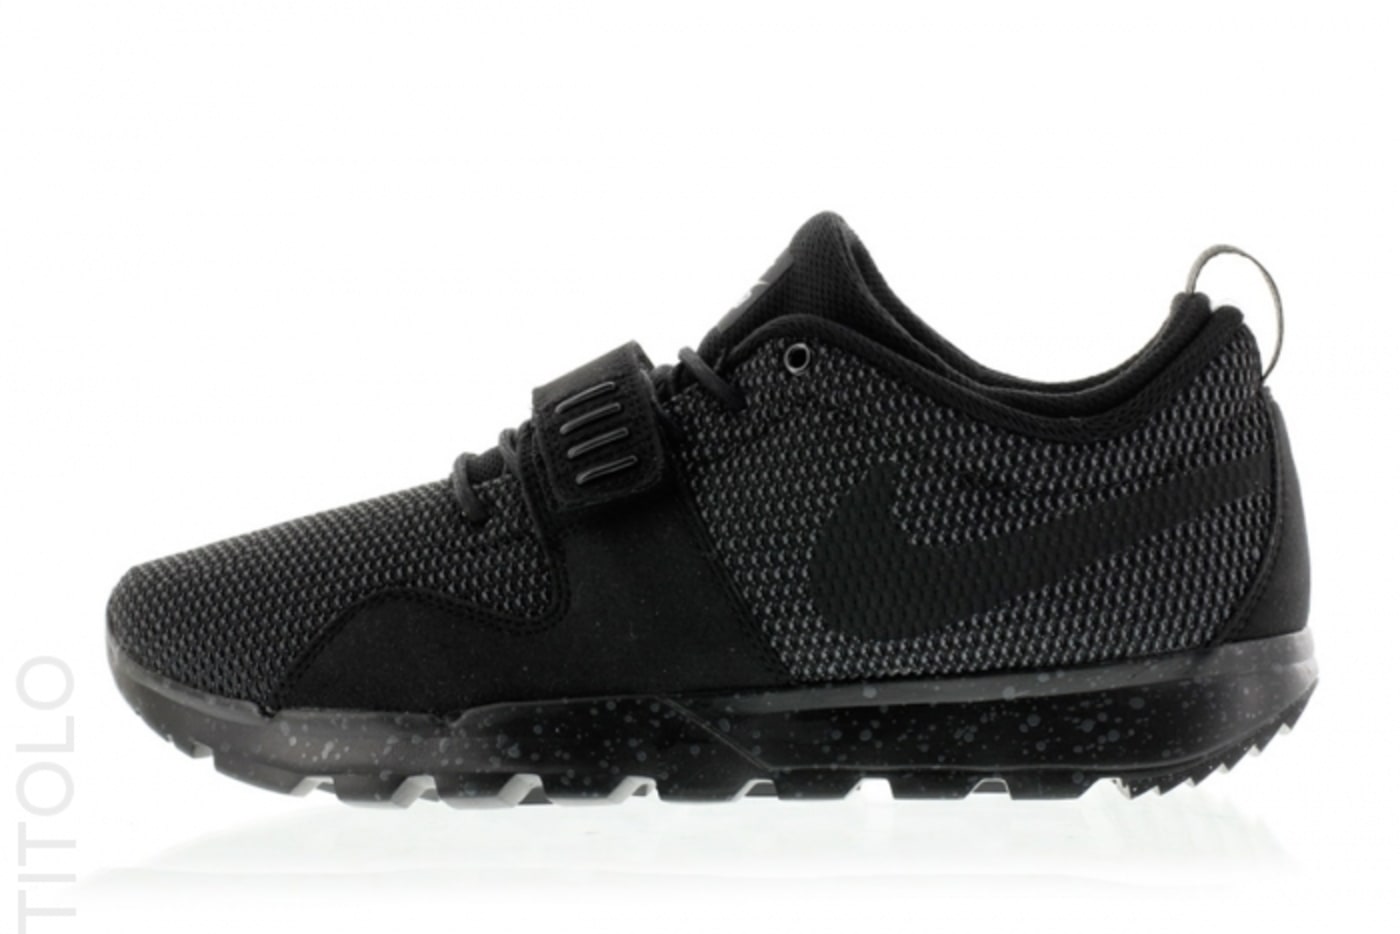 centavo tema pala Kicks of the Day: Nike SB Trainerendor “Black/Black-Dark Grey” | Complex